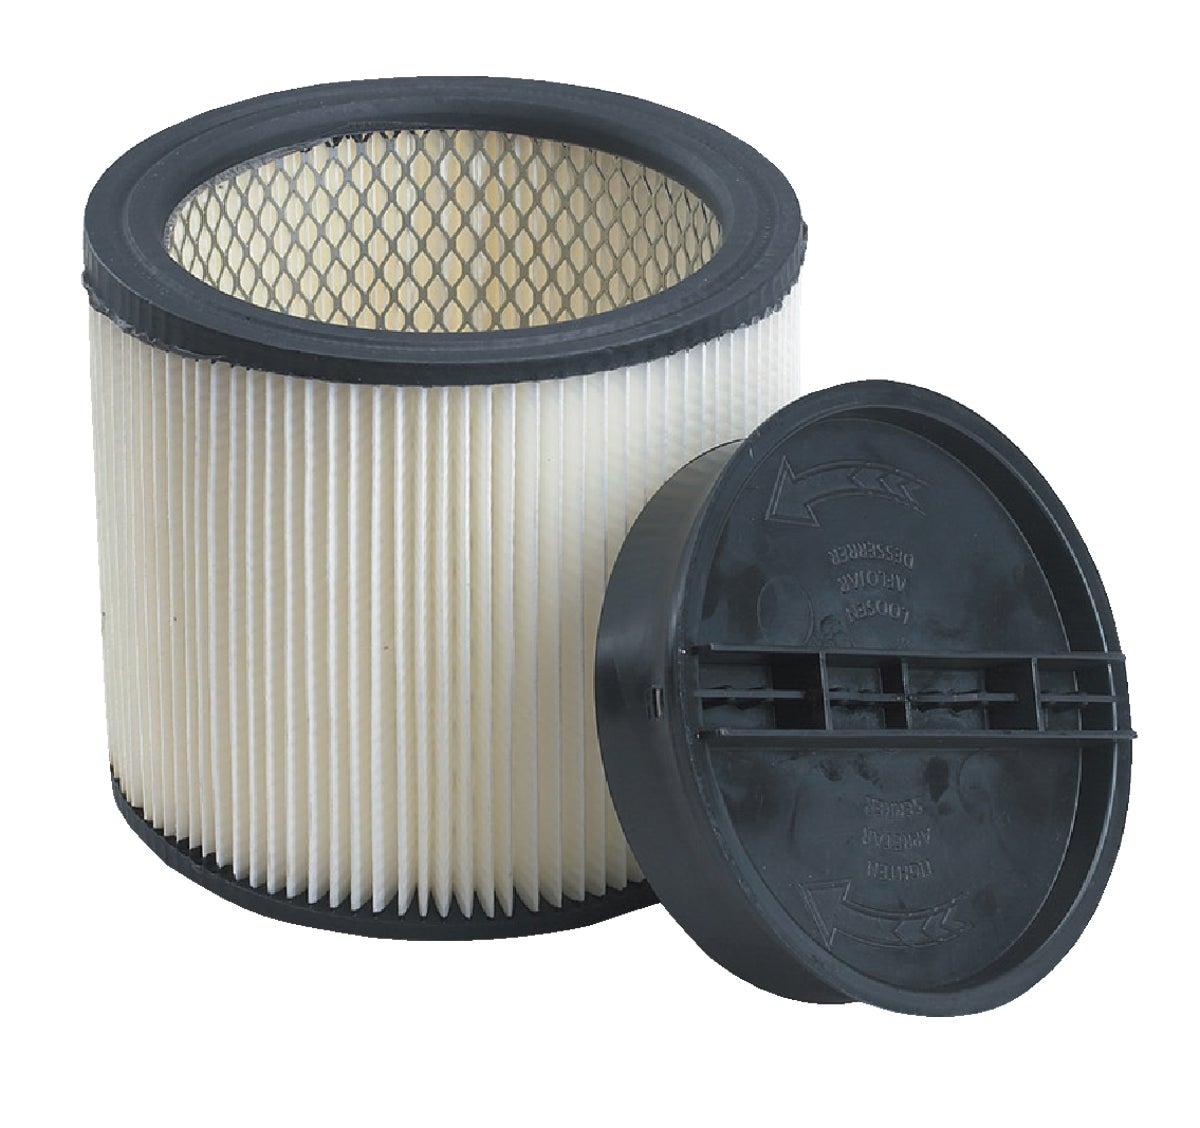 8x Cartridge Filter for Shop-Vac 286-00-10 394-20-00 w/ Vaccum Kit 